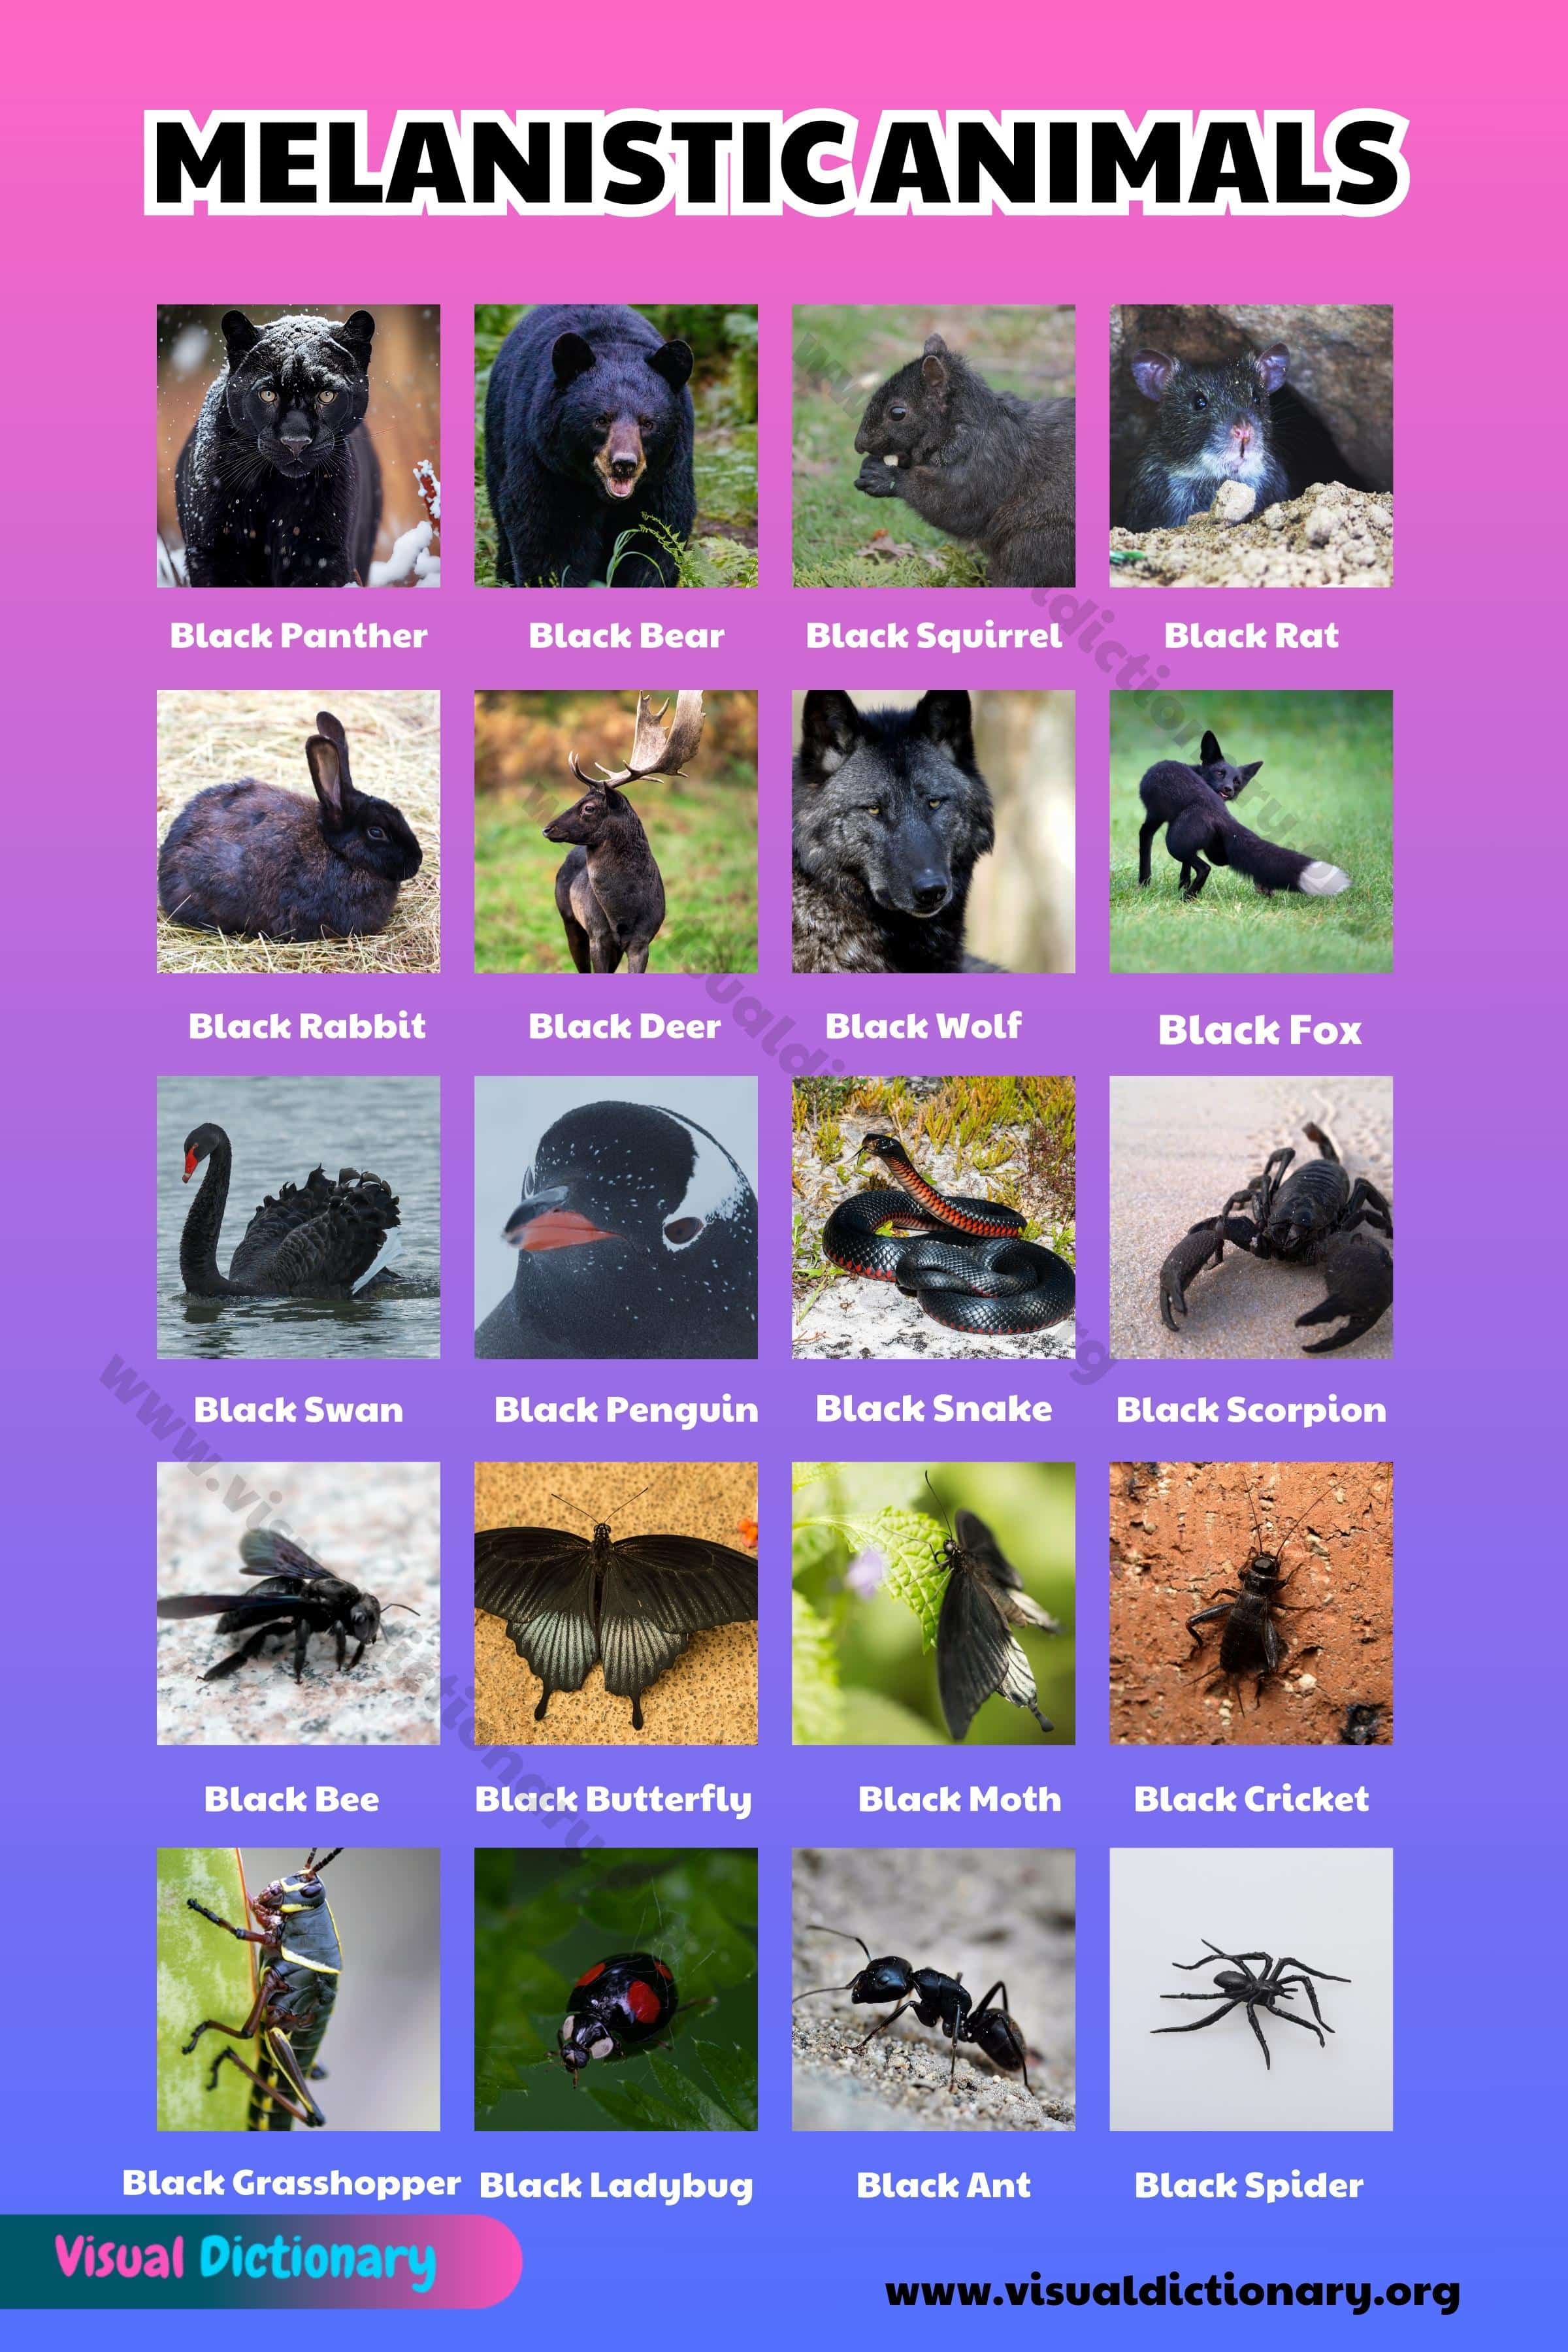 Melanistic Animals: 29 Names of Melanistic Animals in the Animal Kingdom